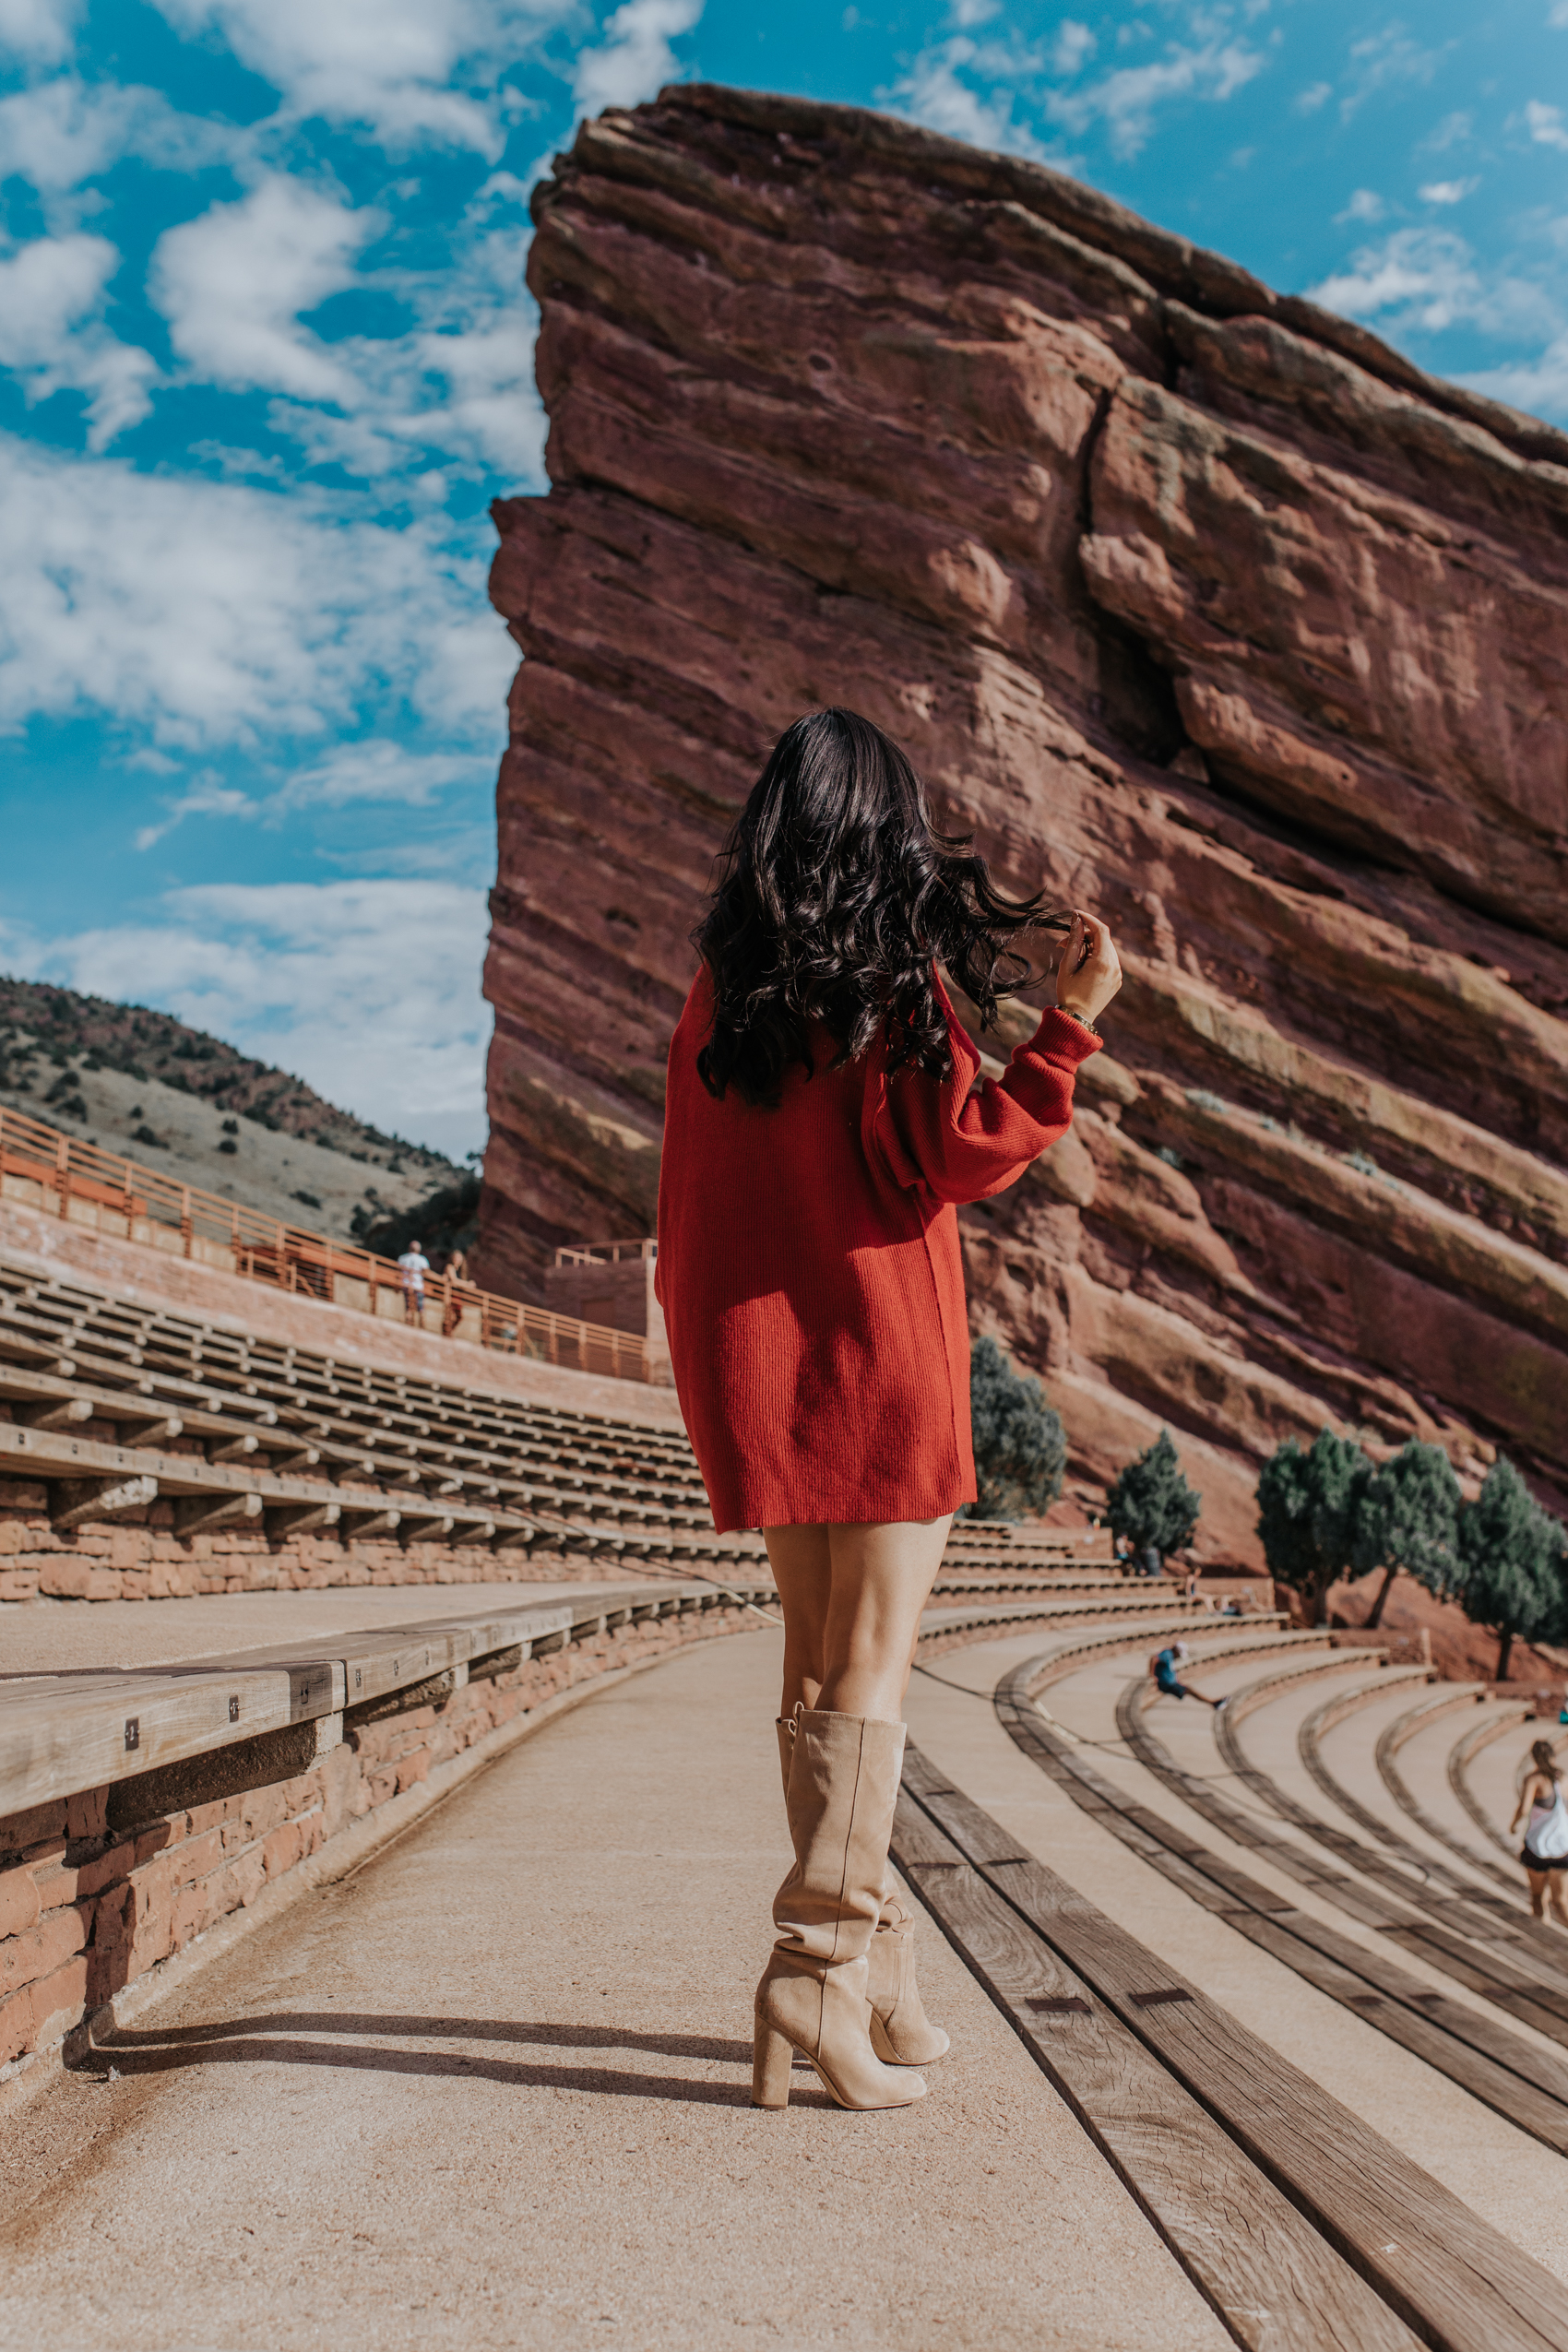 Denver Travel Guide - visit Red Rocks Amphitheater 